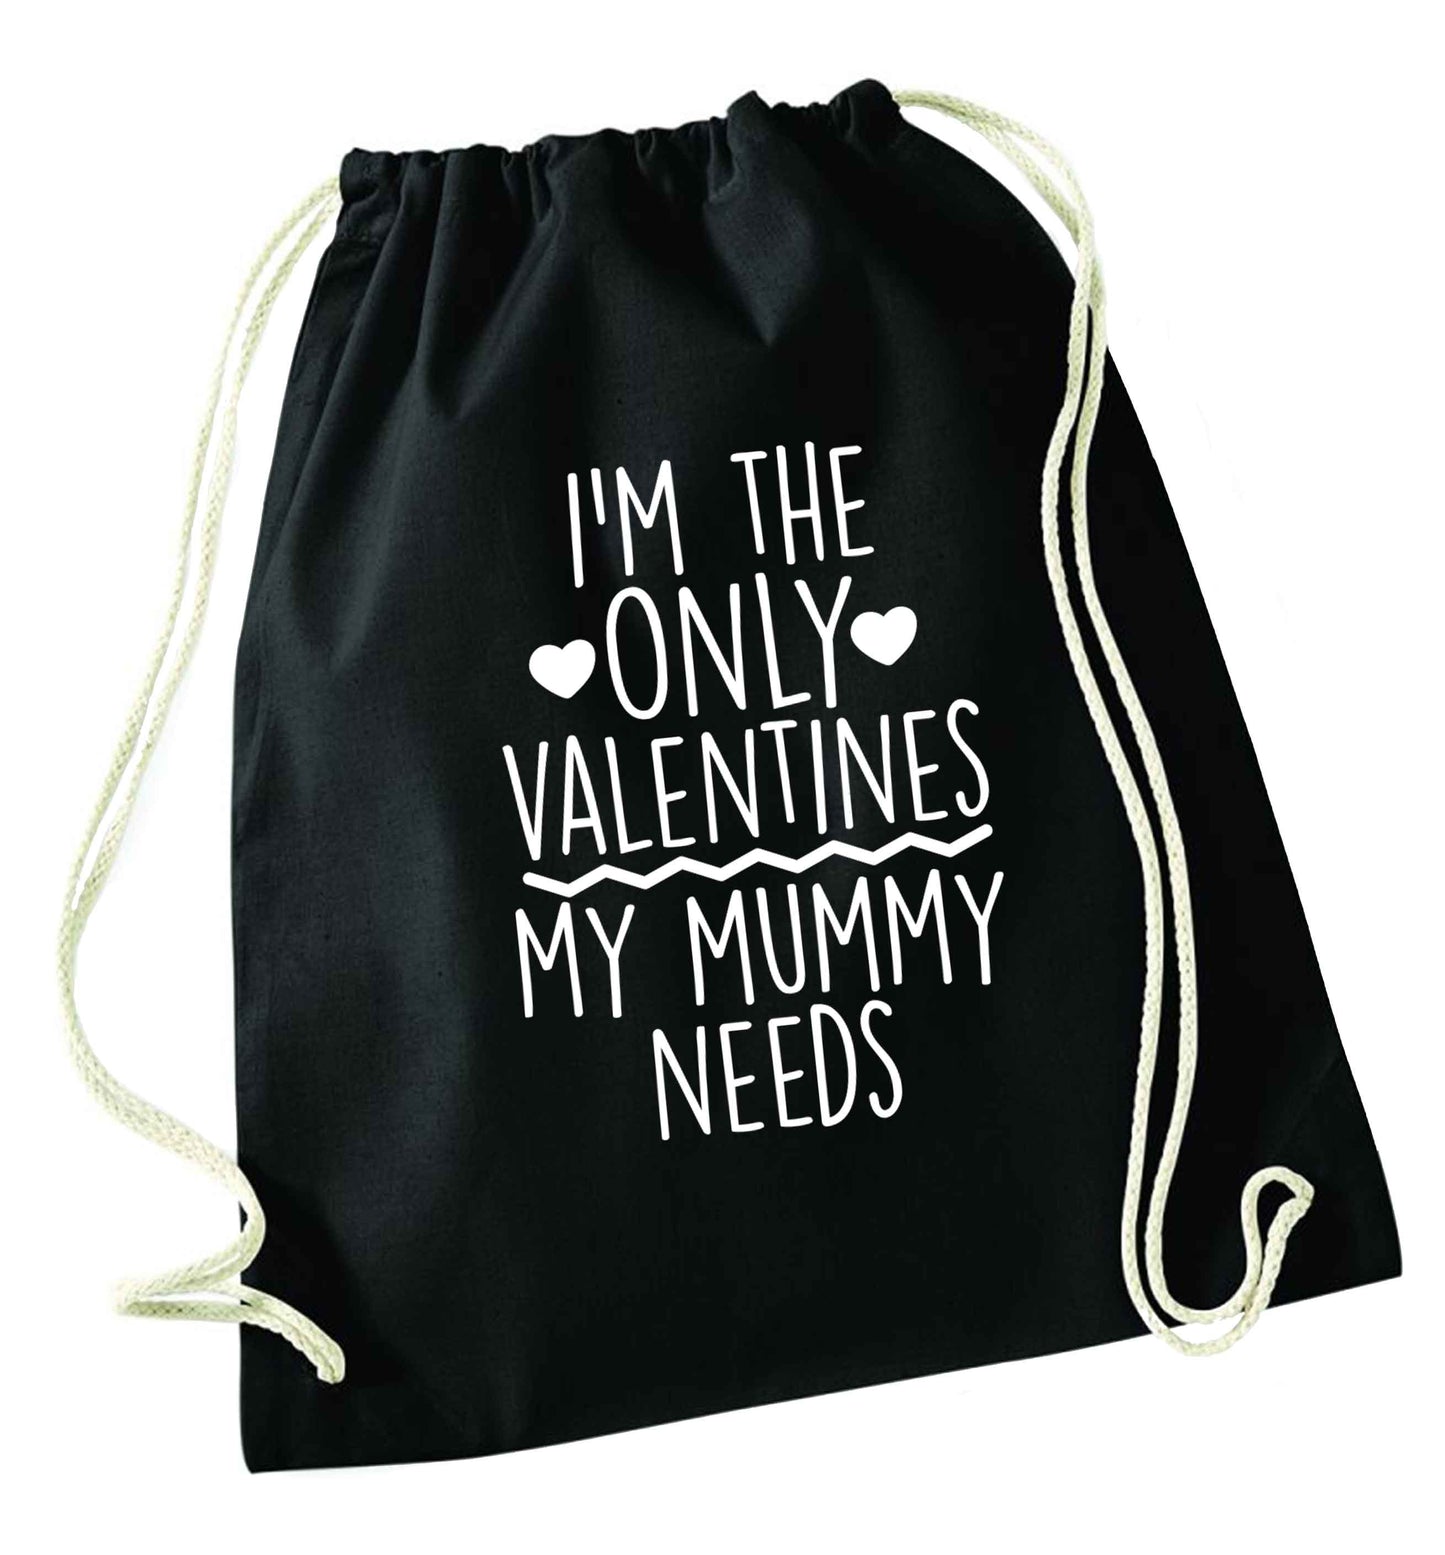 I'm the only valentines my mummy needs black drawstring bag